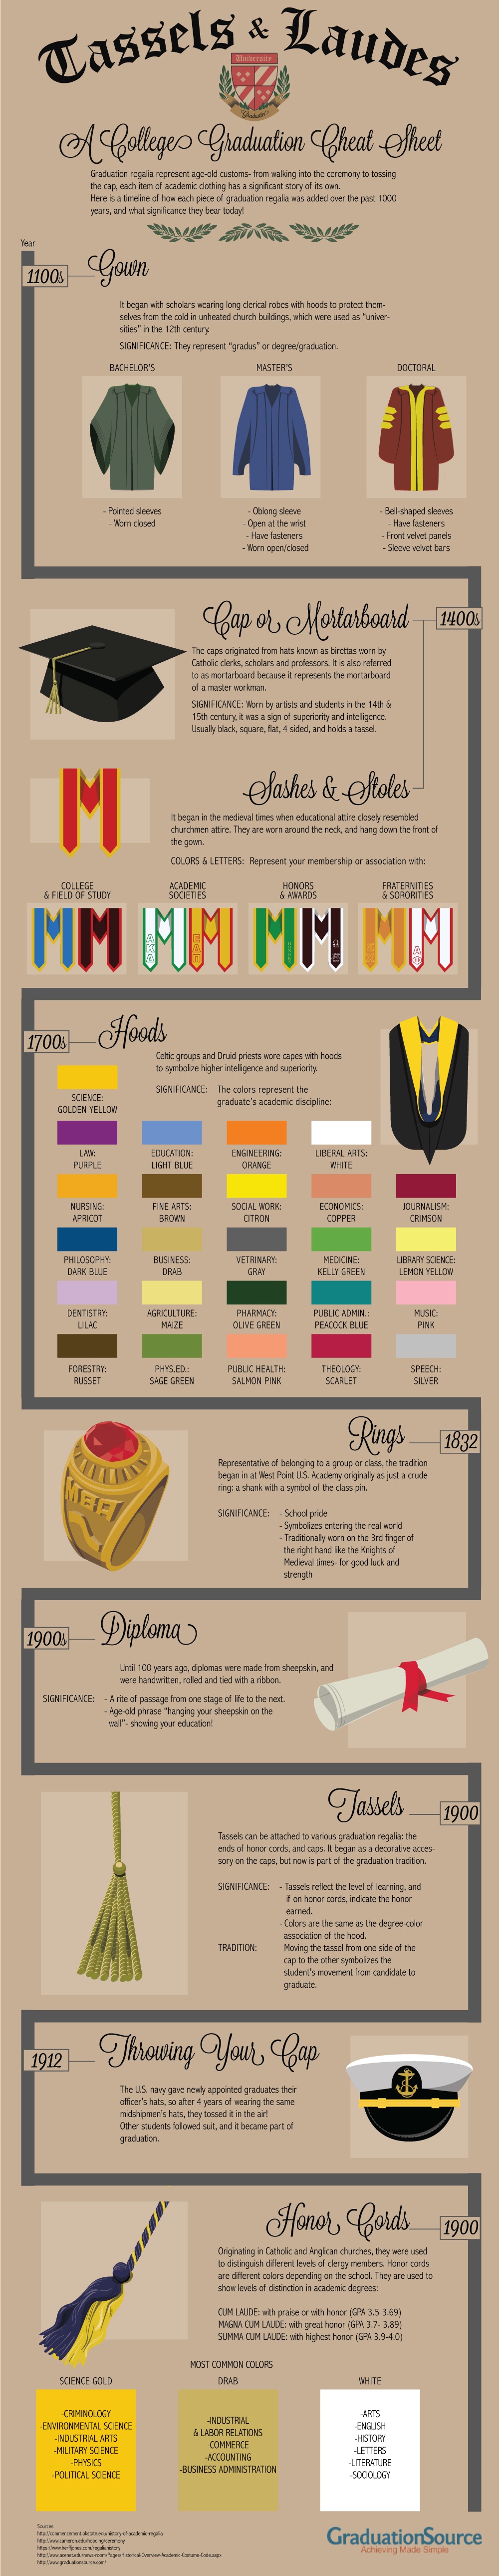 College Graduation Cheat Sheet Infographic